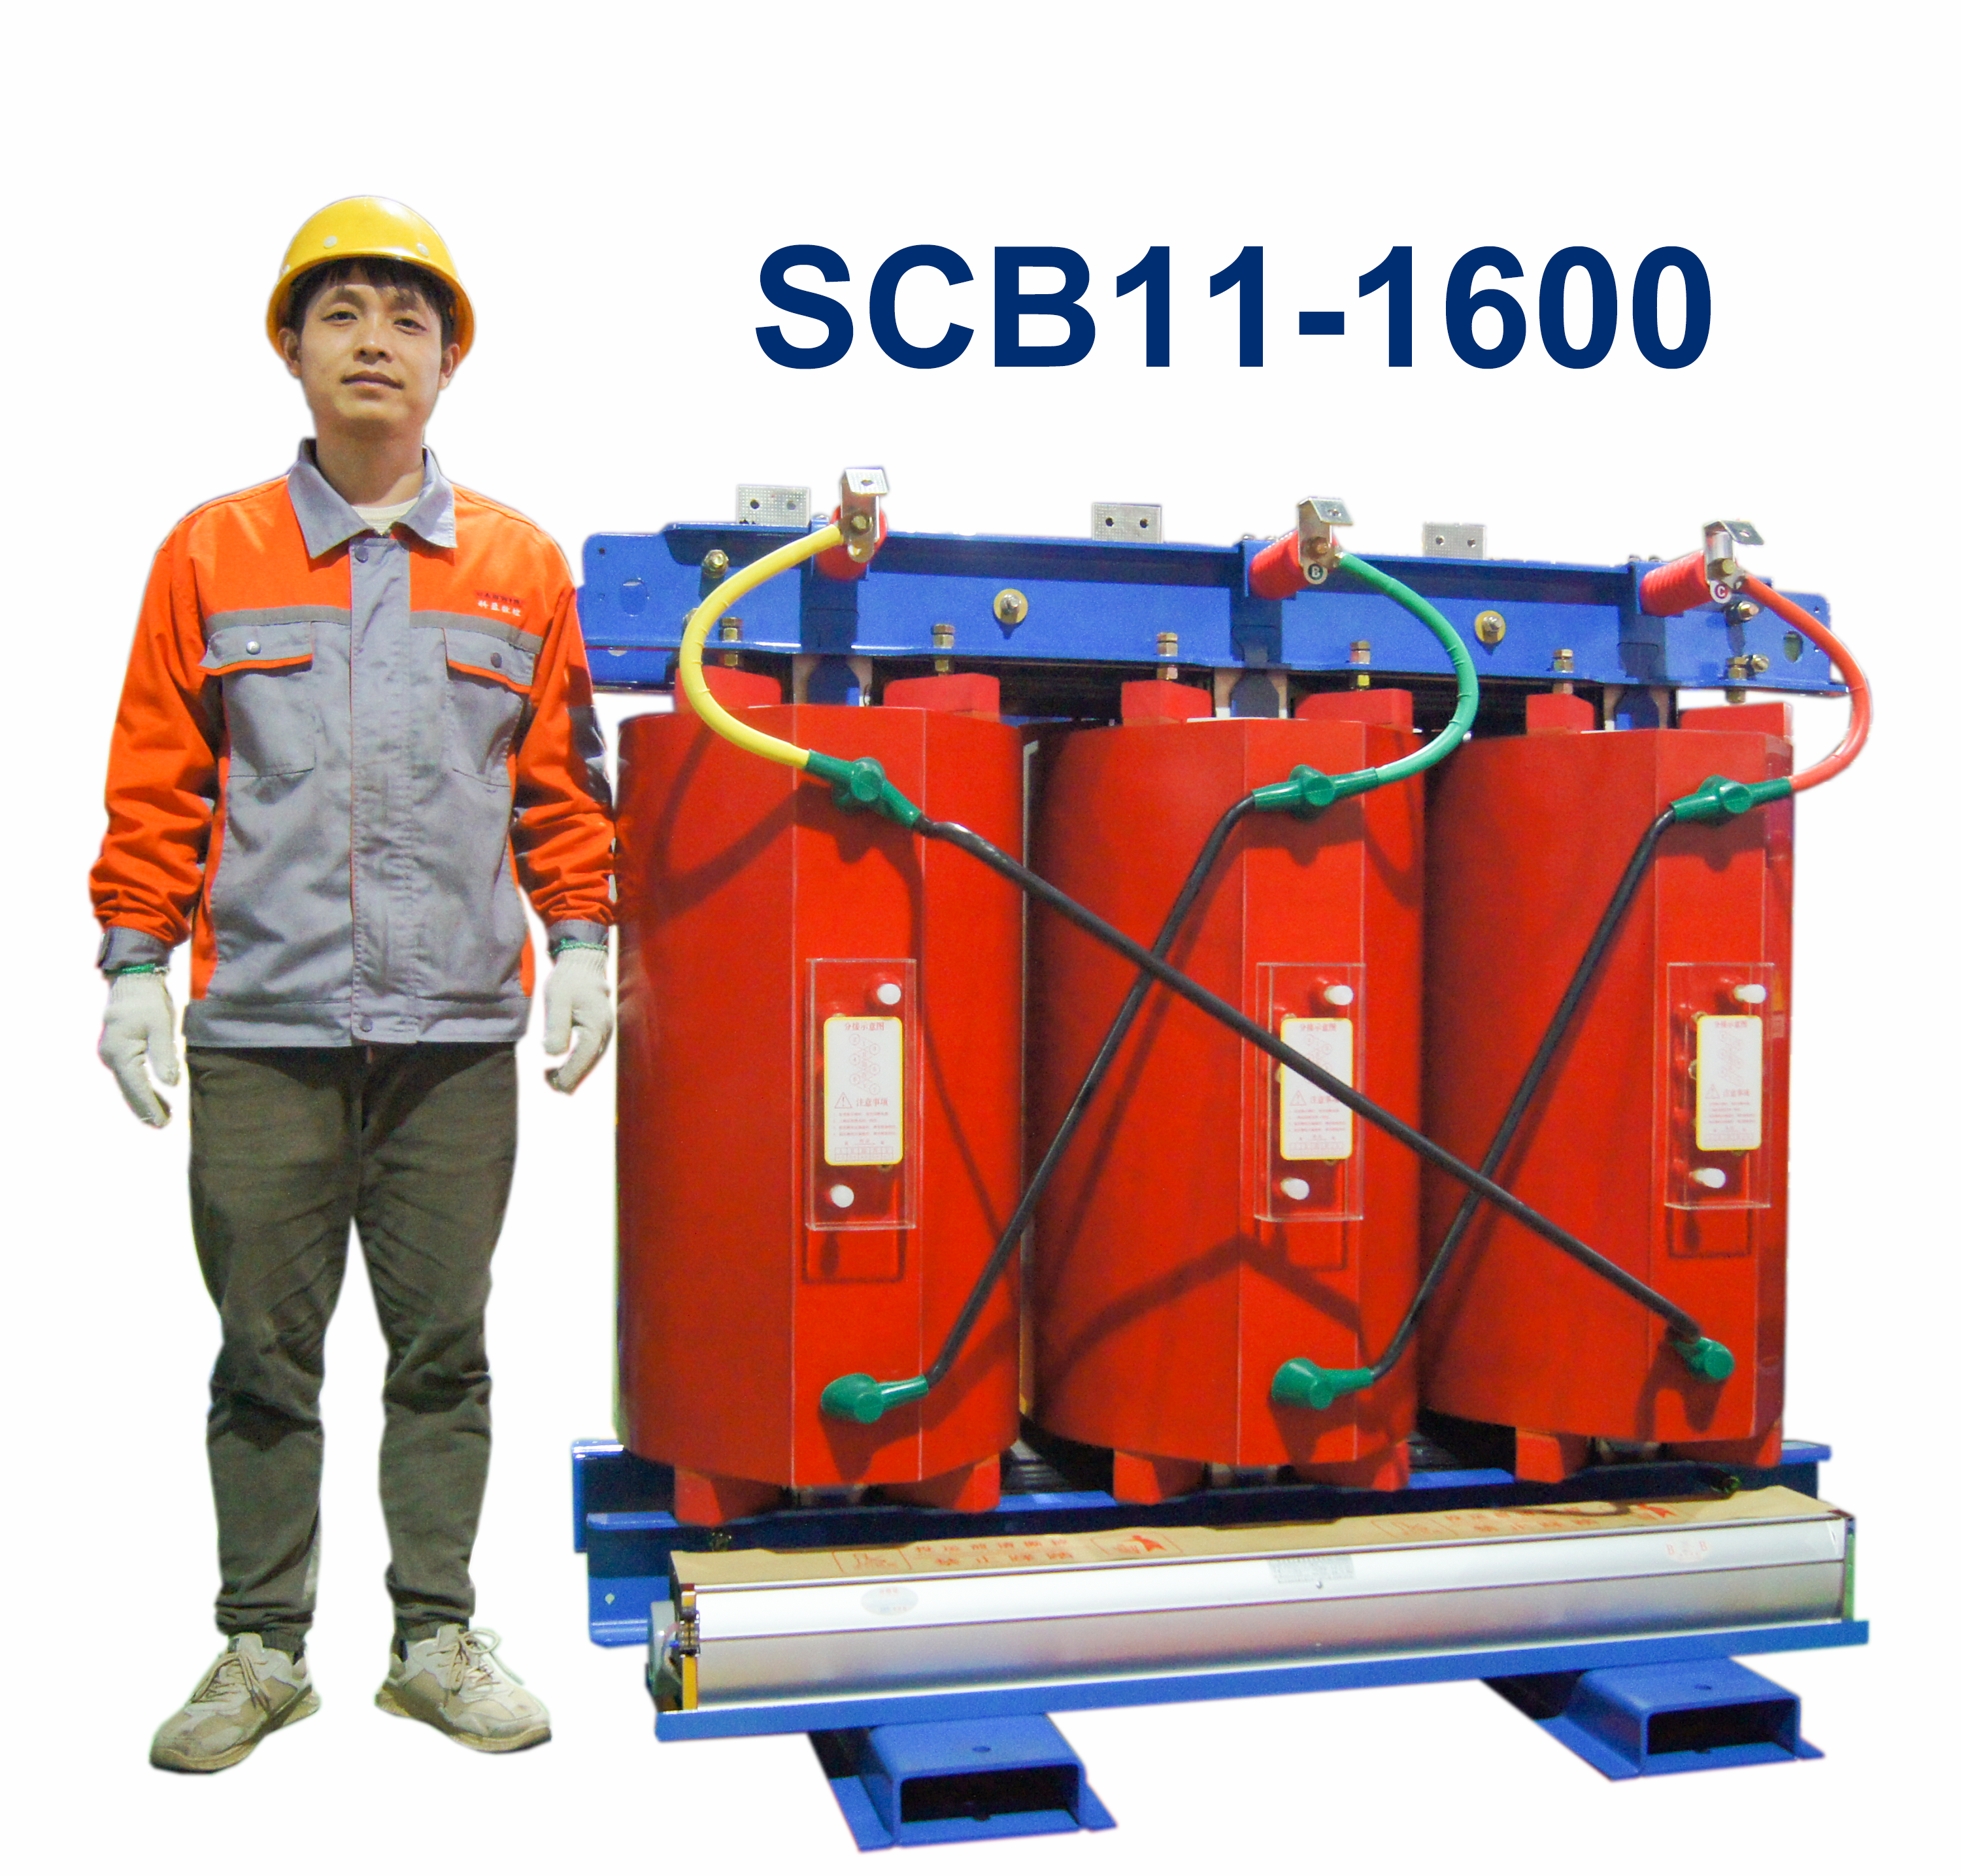 SCB11-1600